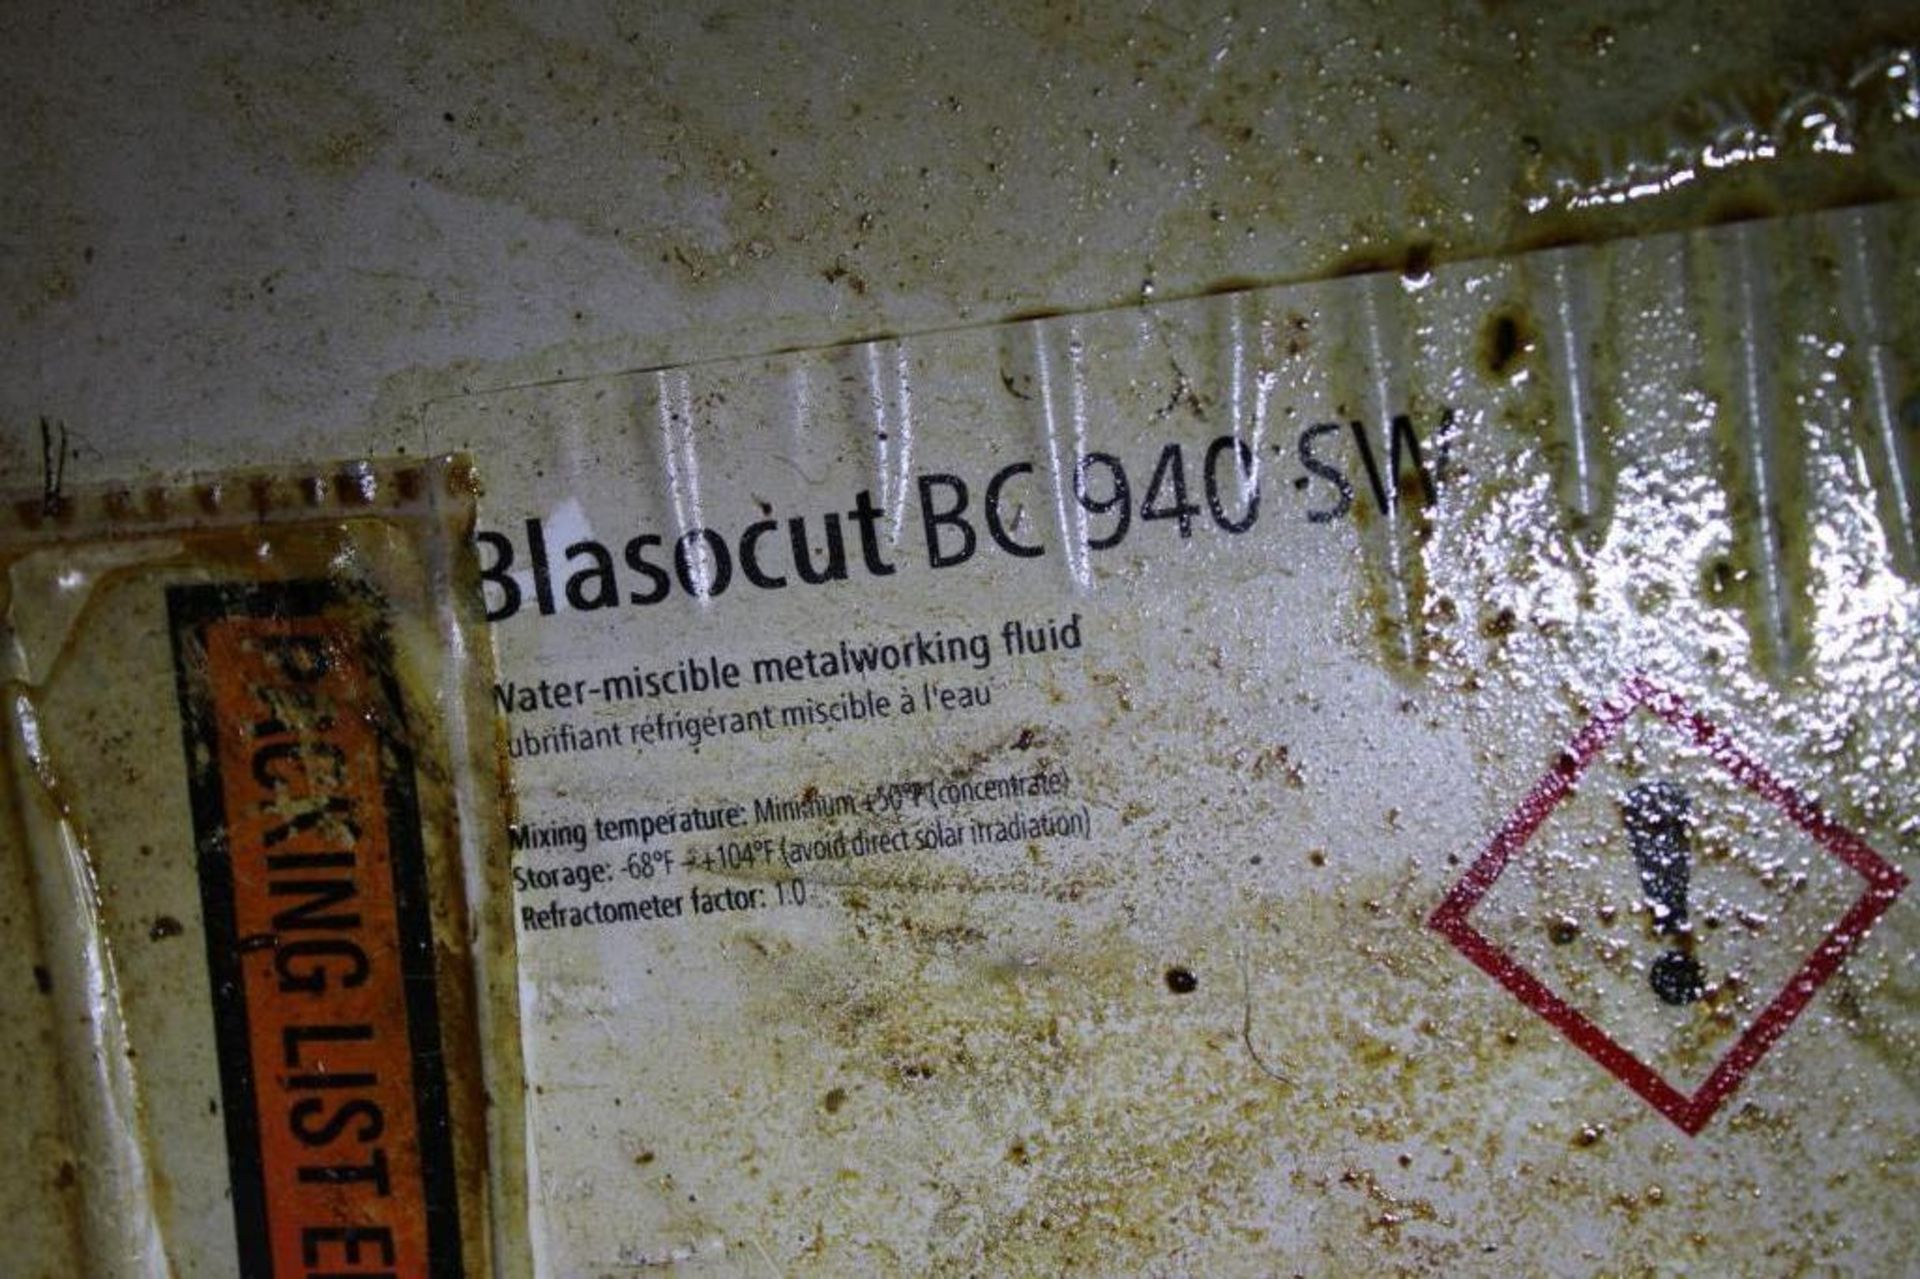 Blasocut 940 BC940SW 55 gallon drum w/ pump - Image 3 of 3